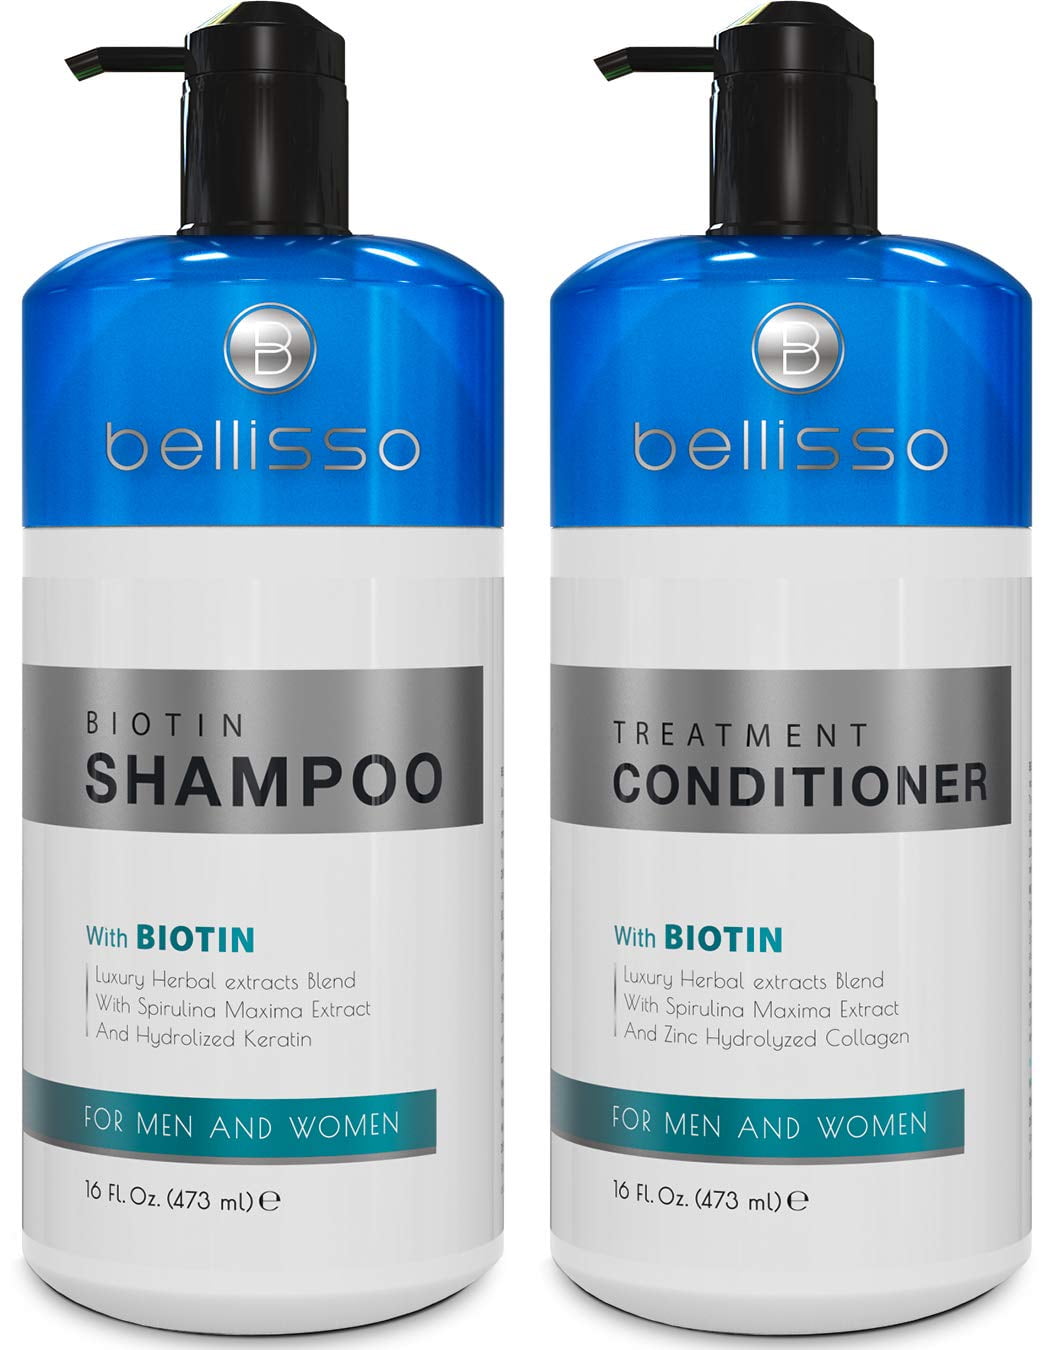 FoliGROWTH Hair Growth Vitamin  Gluten Free Vegan Formula  with High  Potency Biotin Stop Hair Loss  Get Thickest Strongest Hair Growth  Guaranteed  Walmartcom